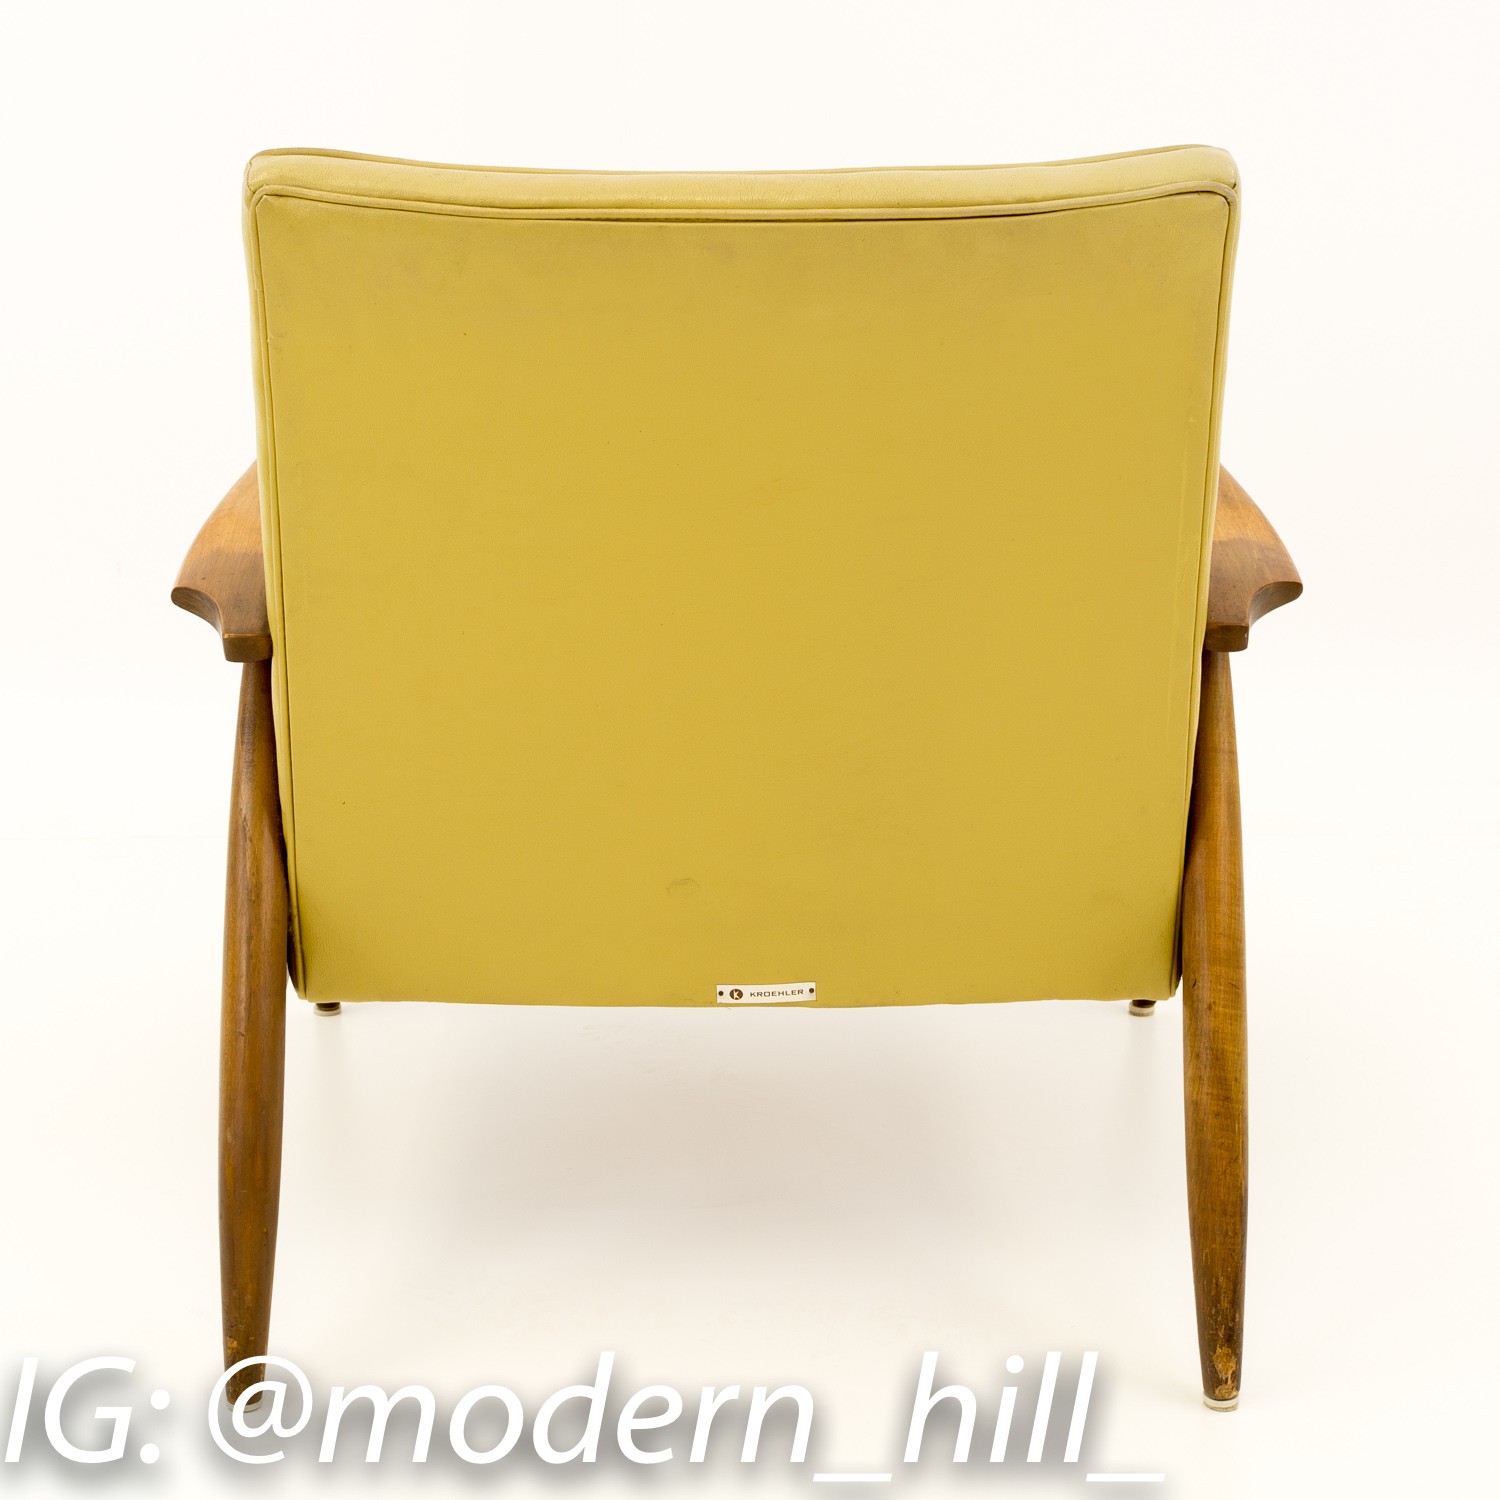 Kofod Larsen Style Kroehler Mid Century Walnut Lounge Chairs - Matching Pair